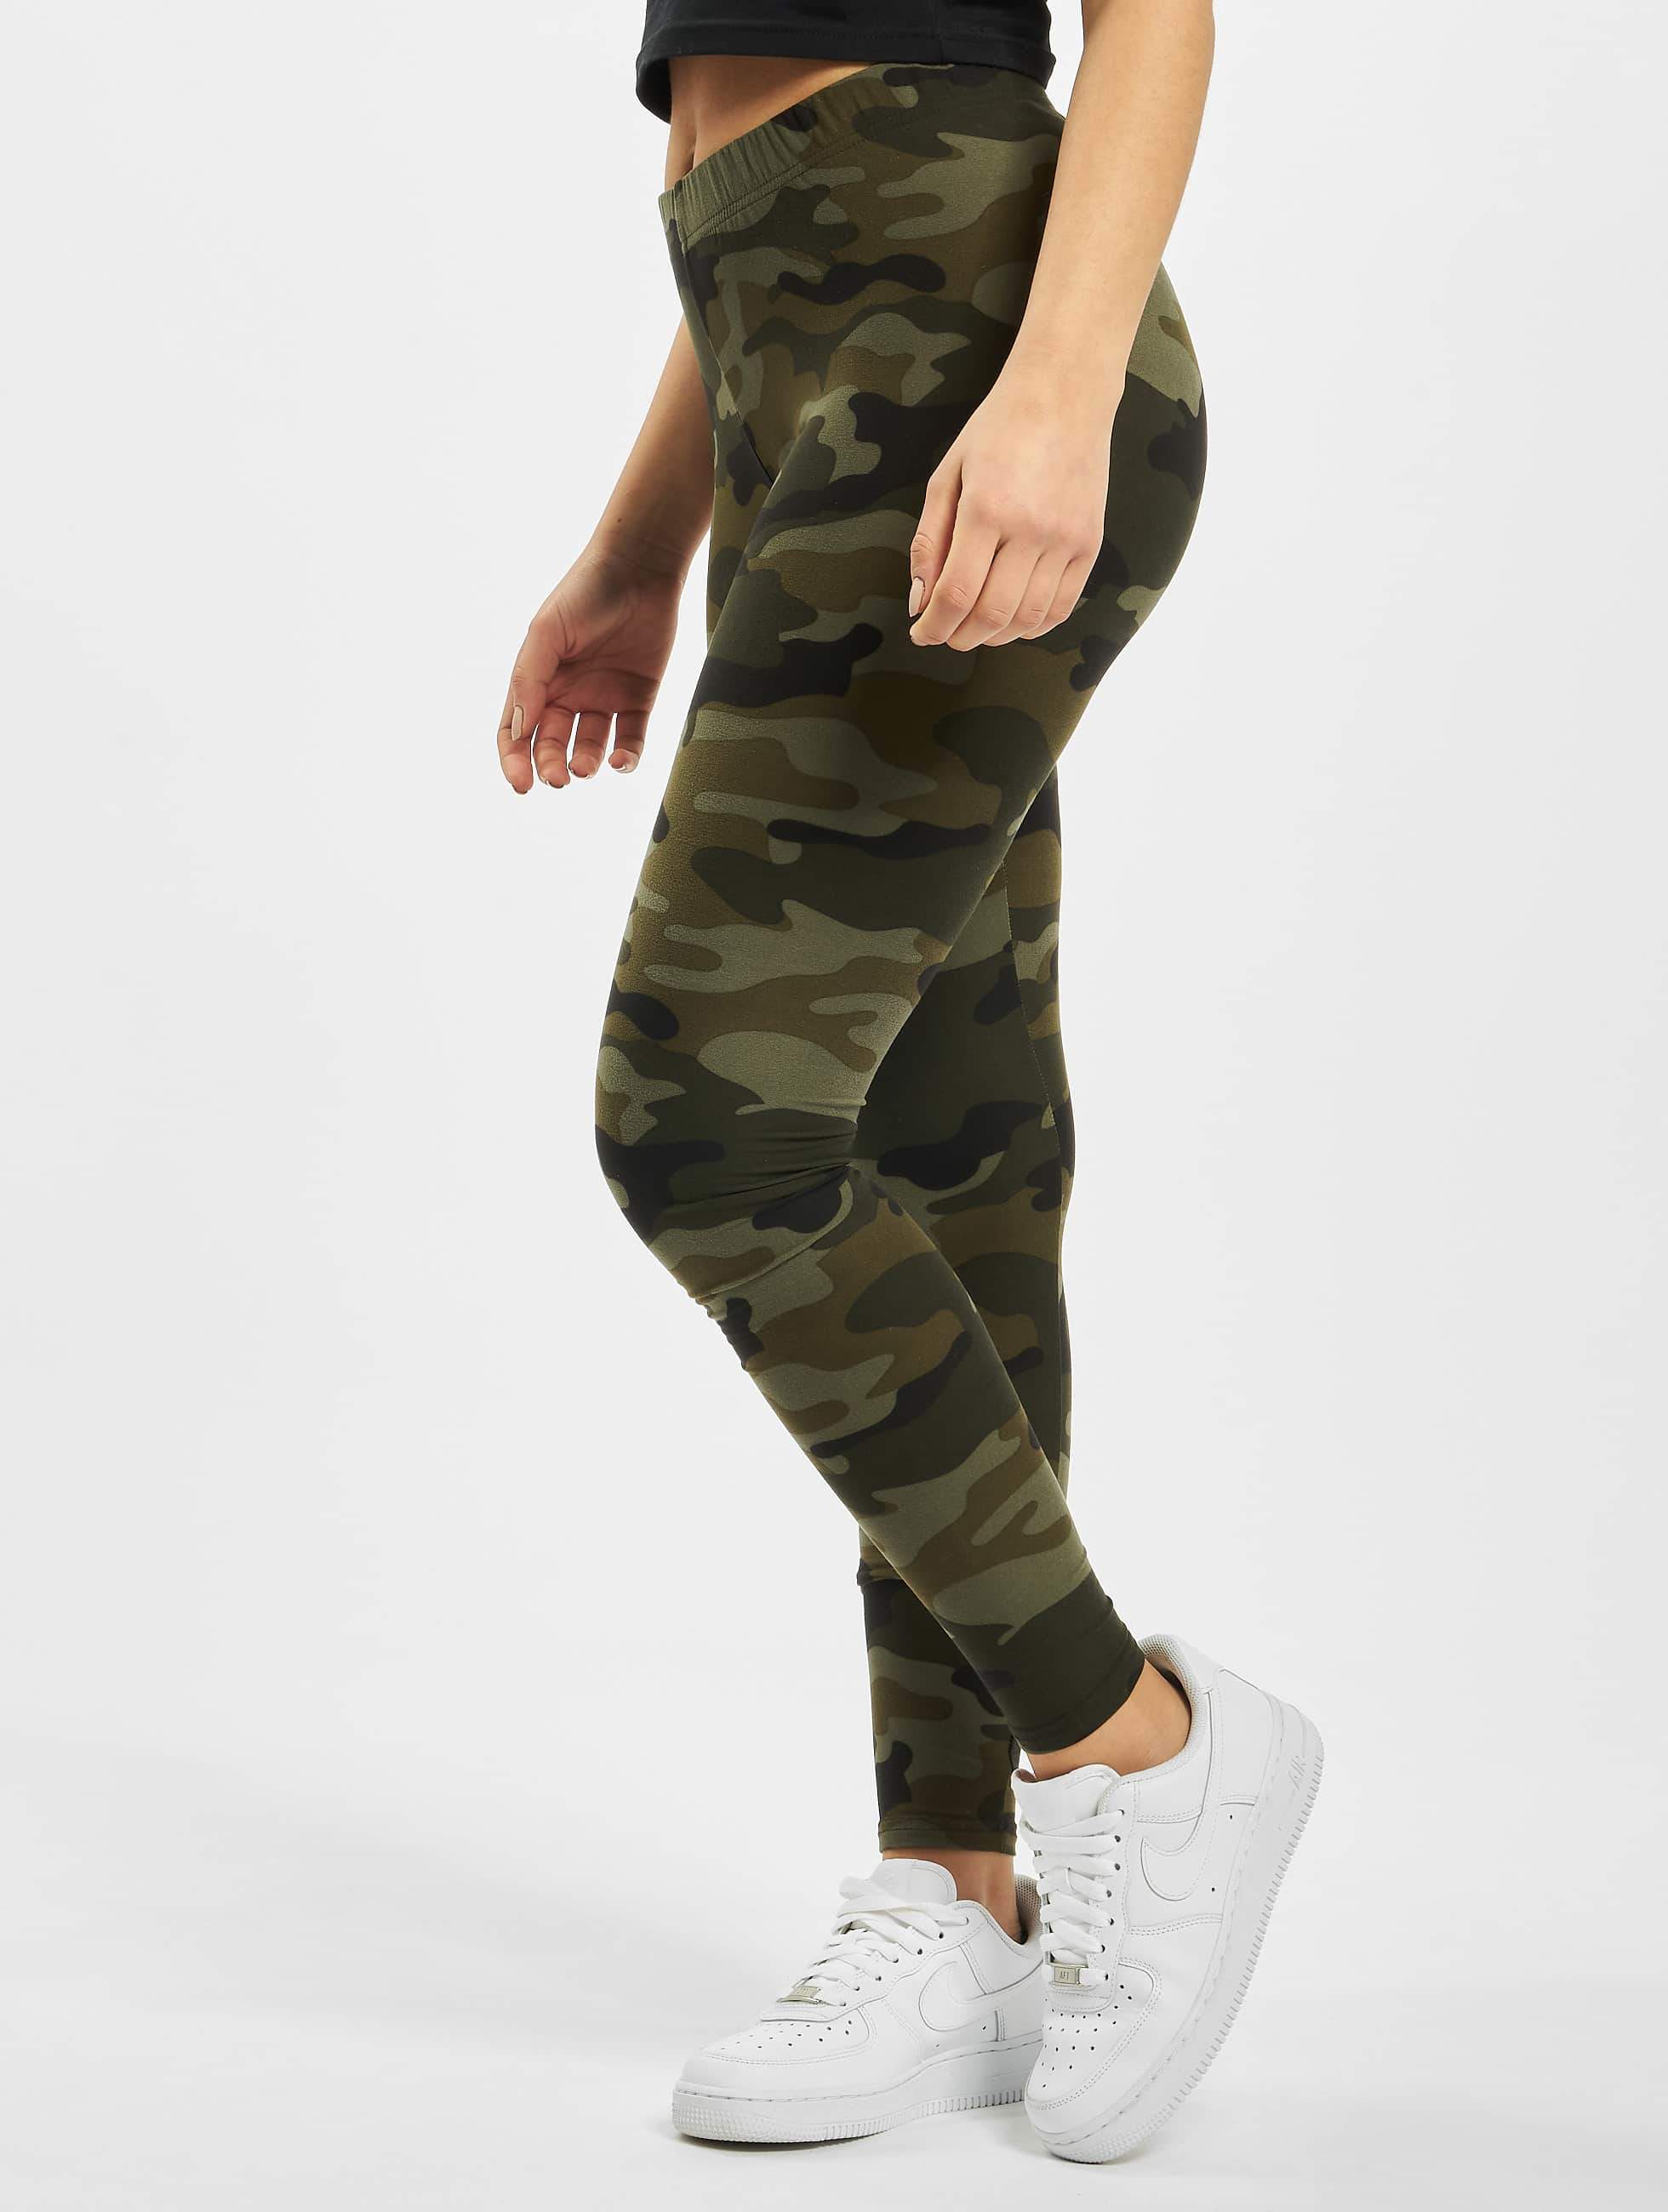 Classics broek / Legging Camo camouflage 293897